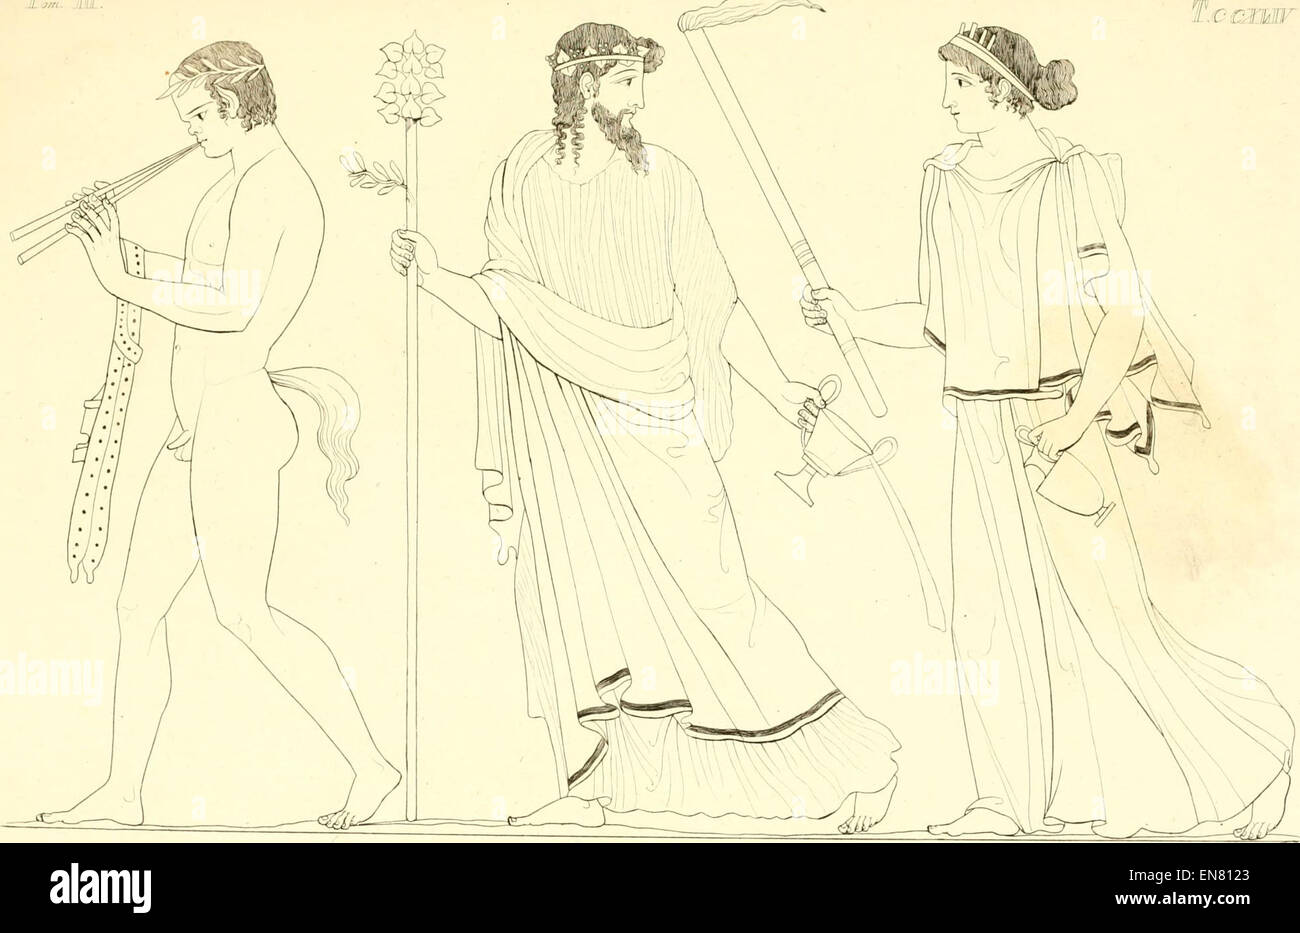 INGHIRAMI(1835) Pitture di vasi fittili Vol3 T244 (14598213680) Banque D'Images